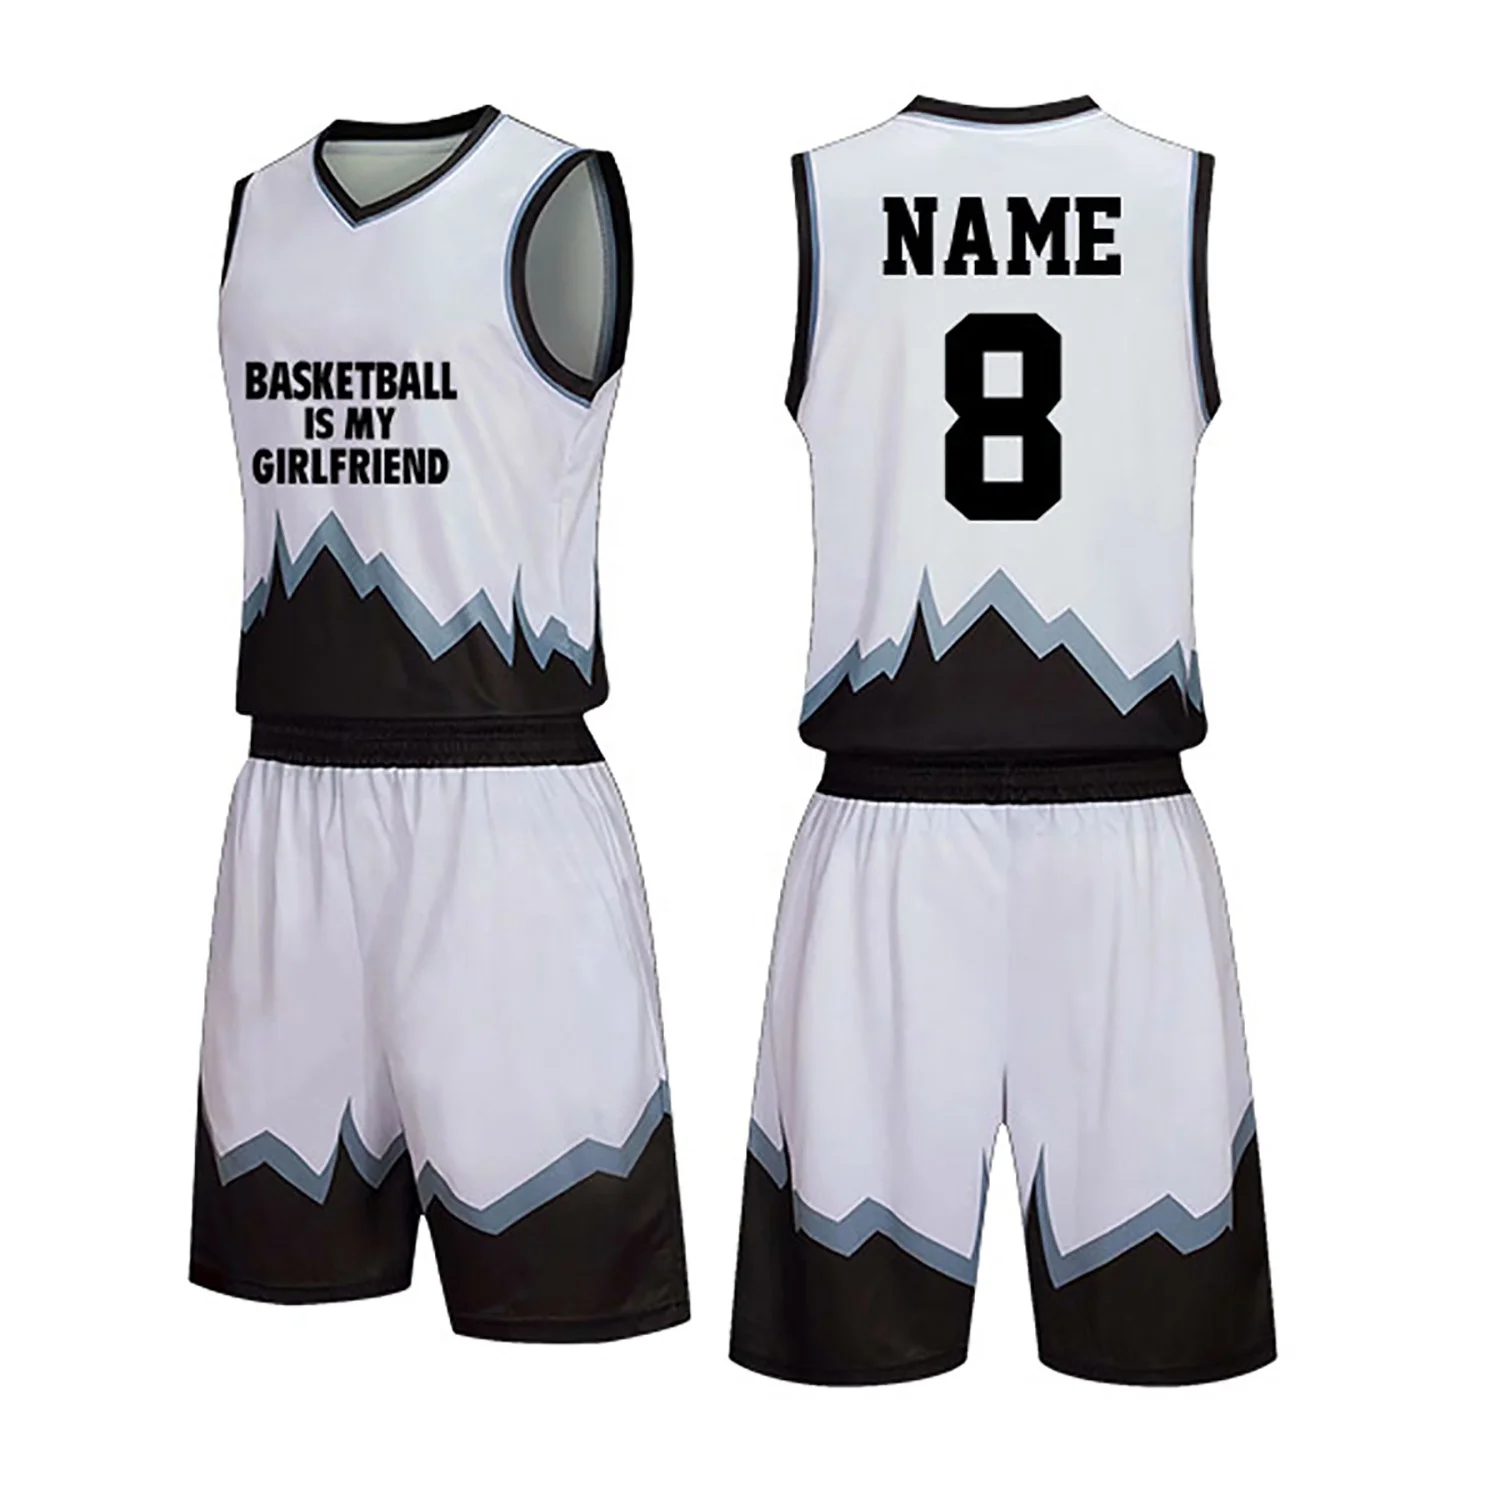 Wholesale black white basketball jersey design For Comfortable Sportswear 